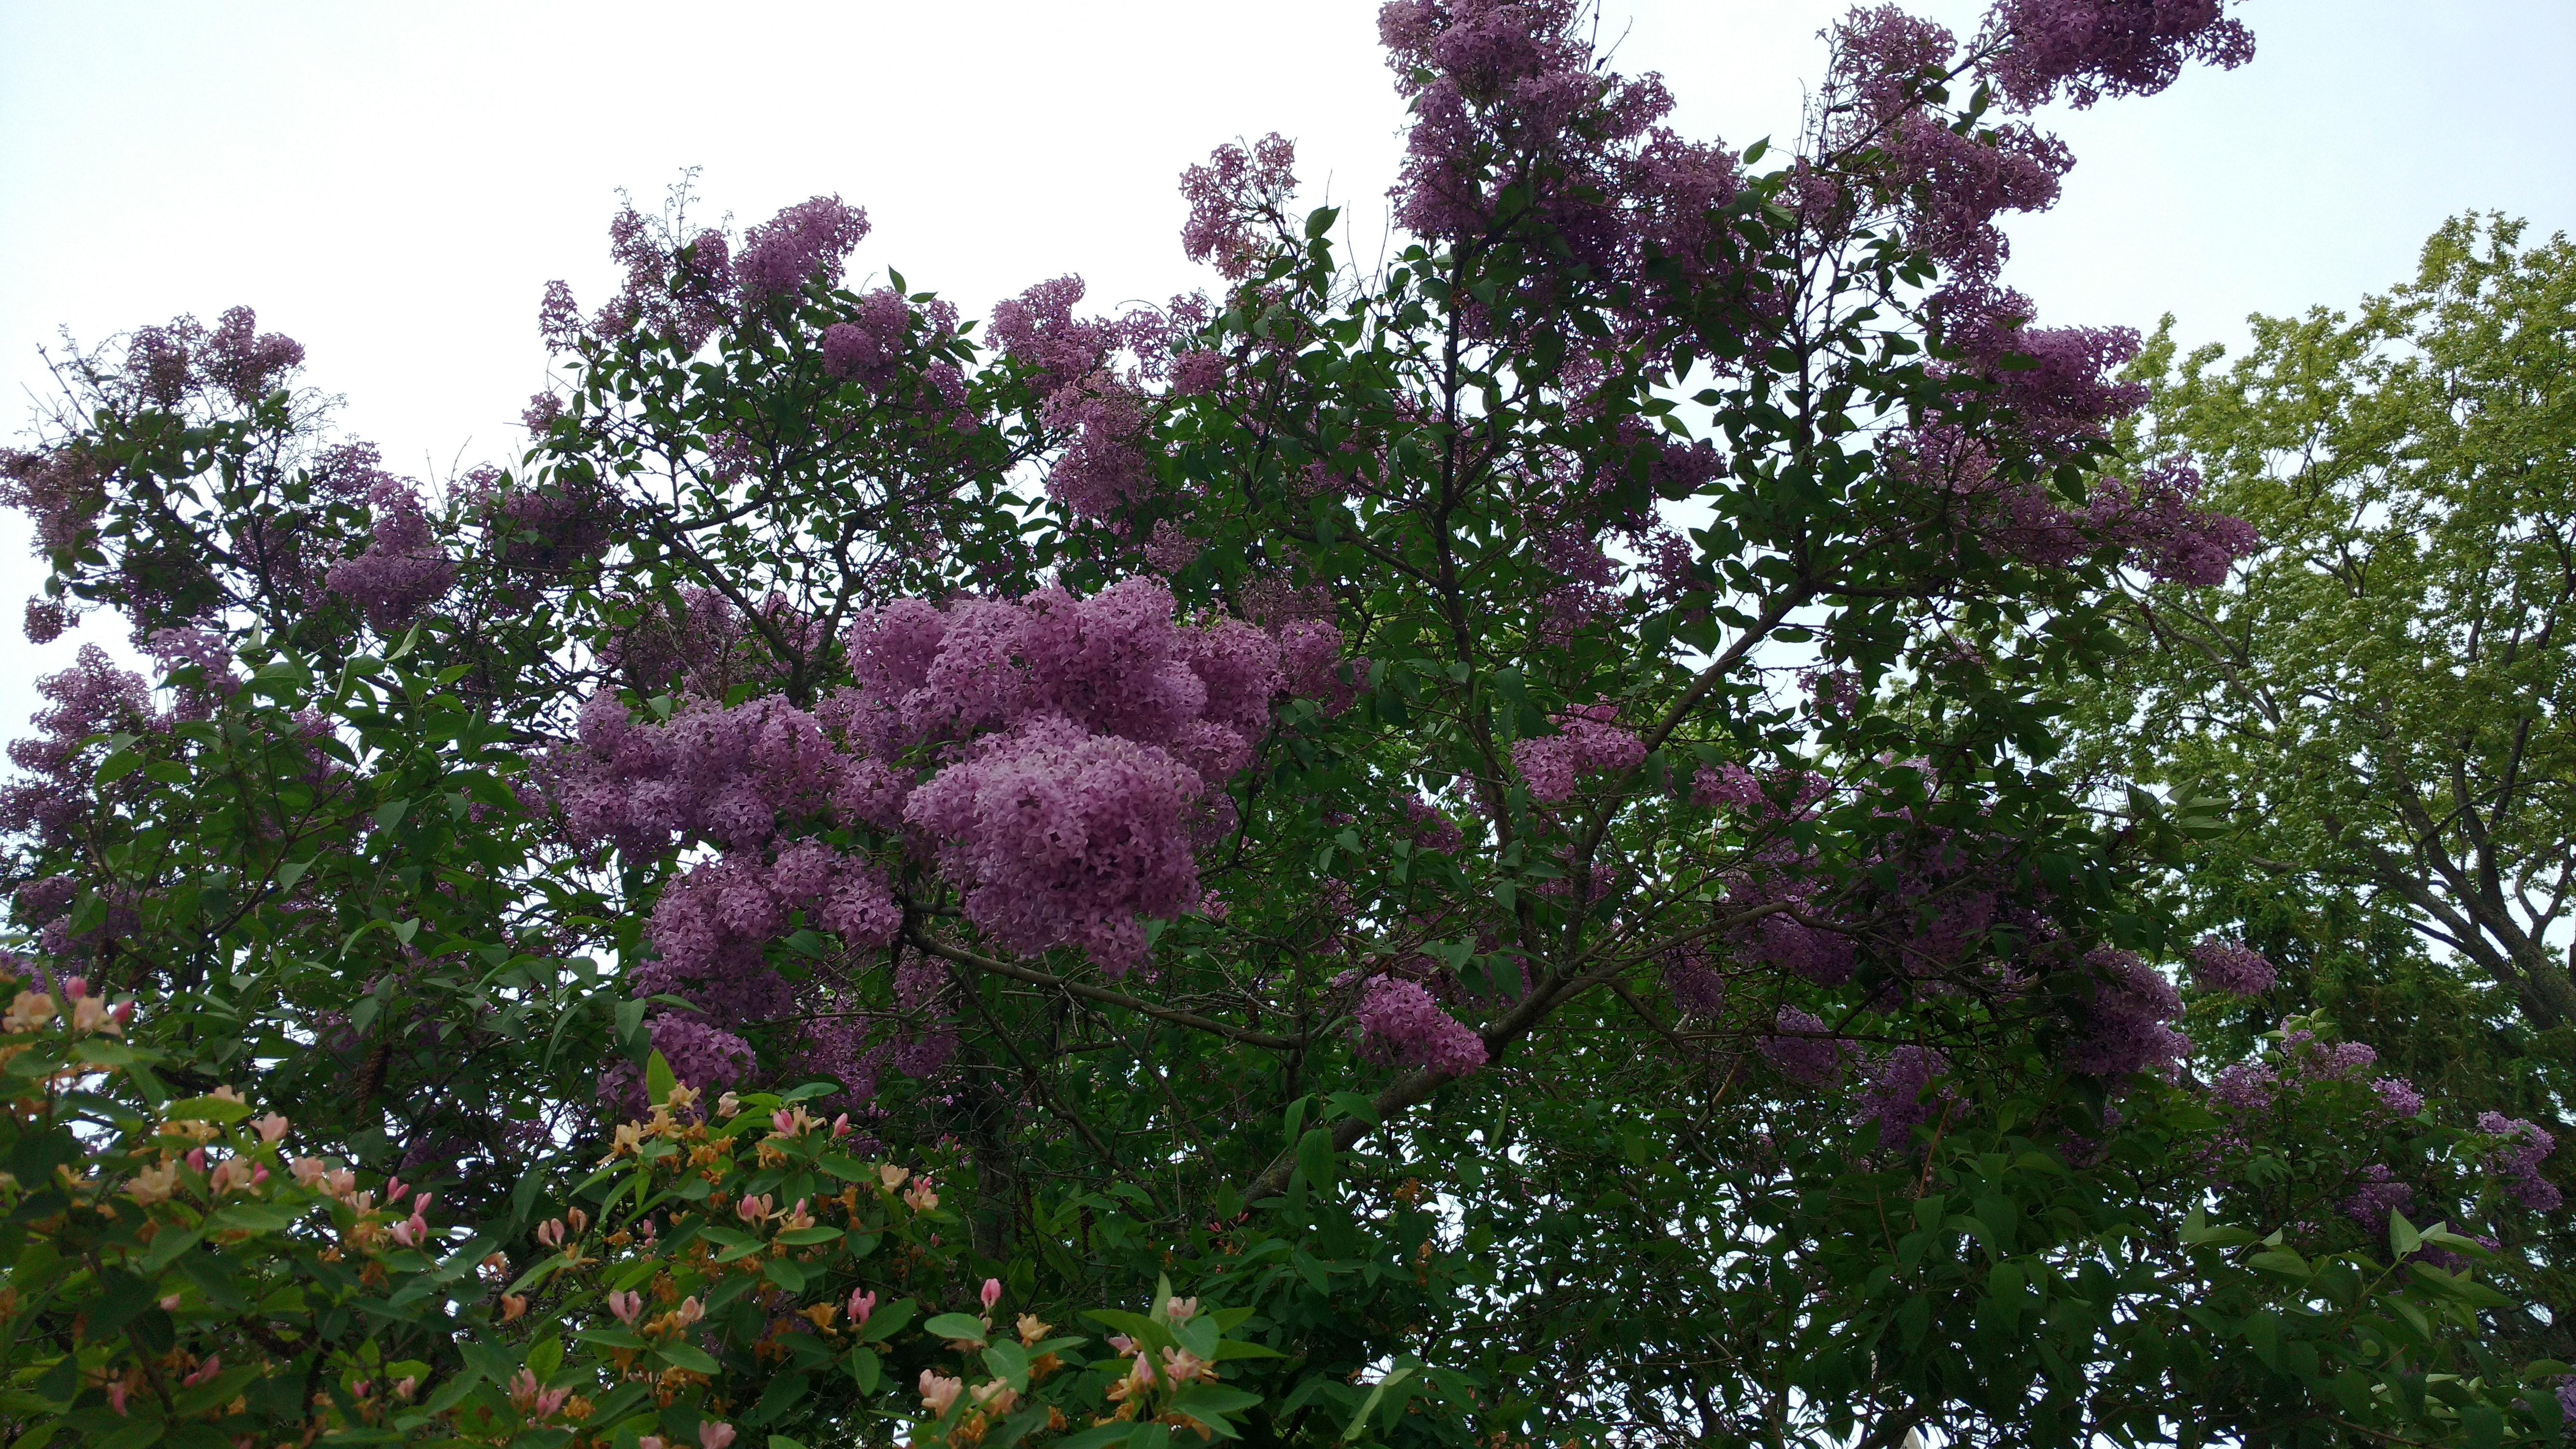 Lilacs in Bloom